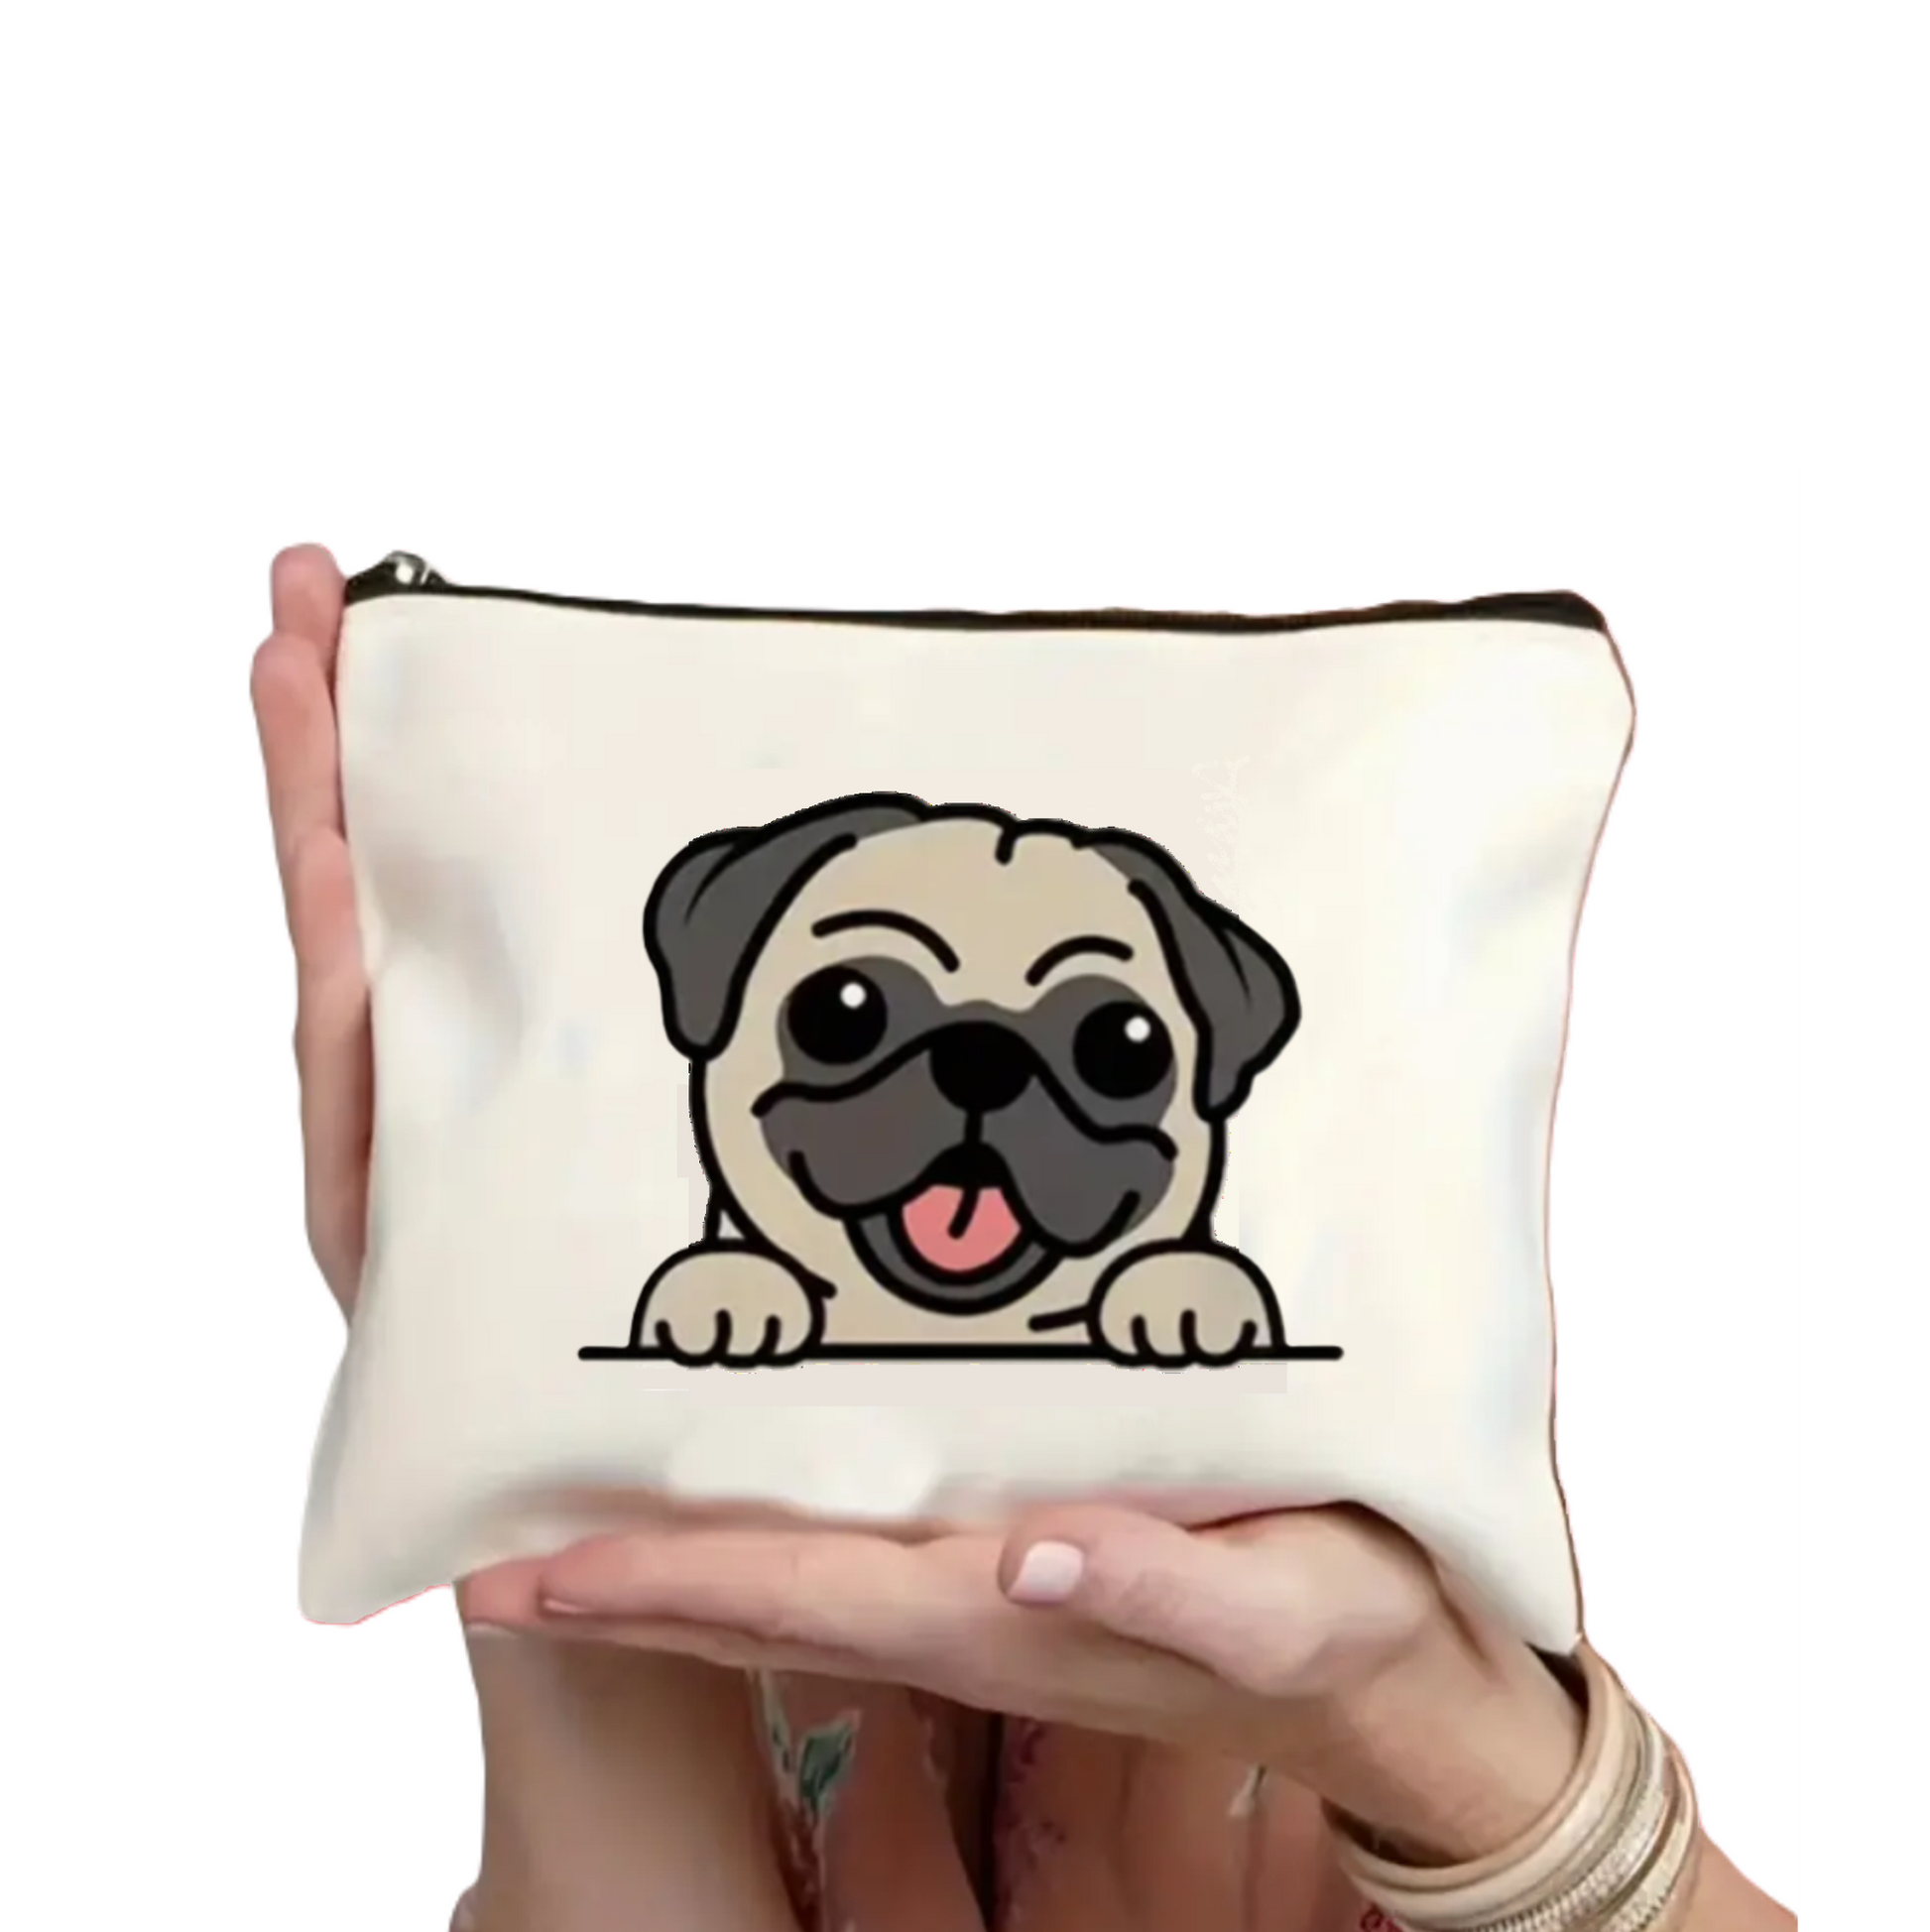 make up bag or pencil case with a pug design